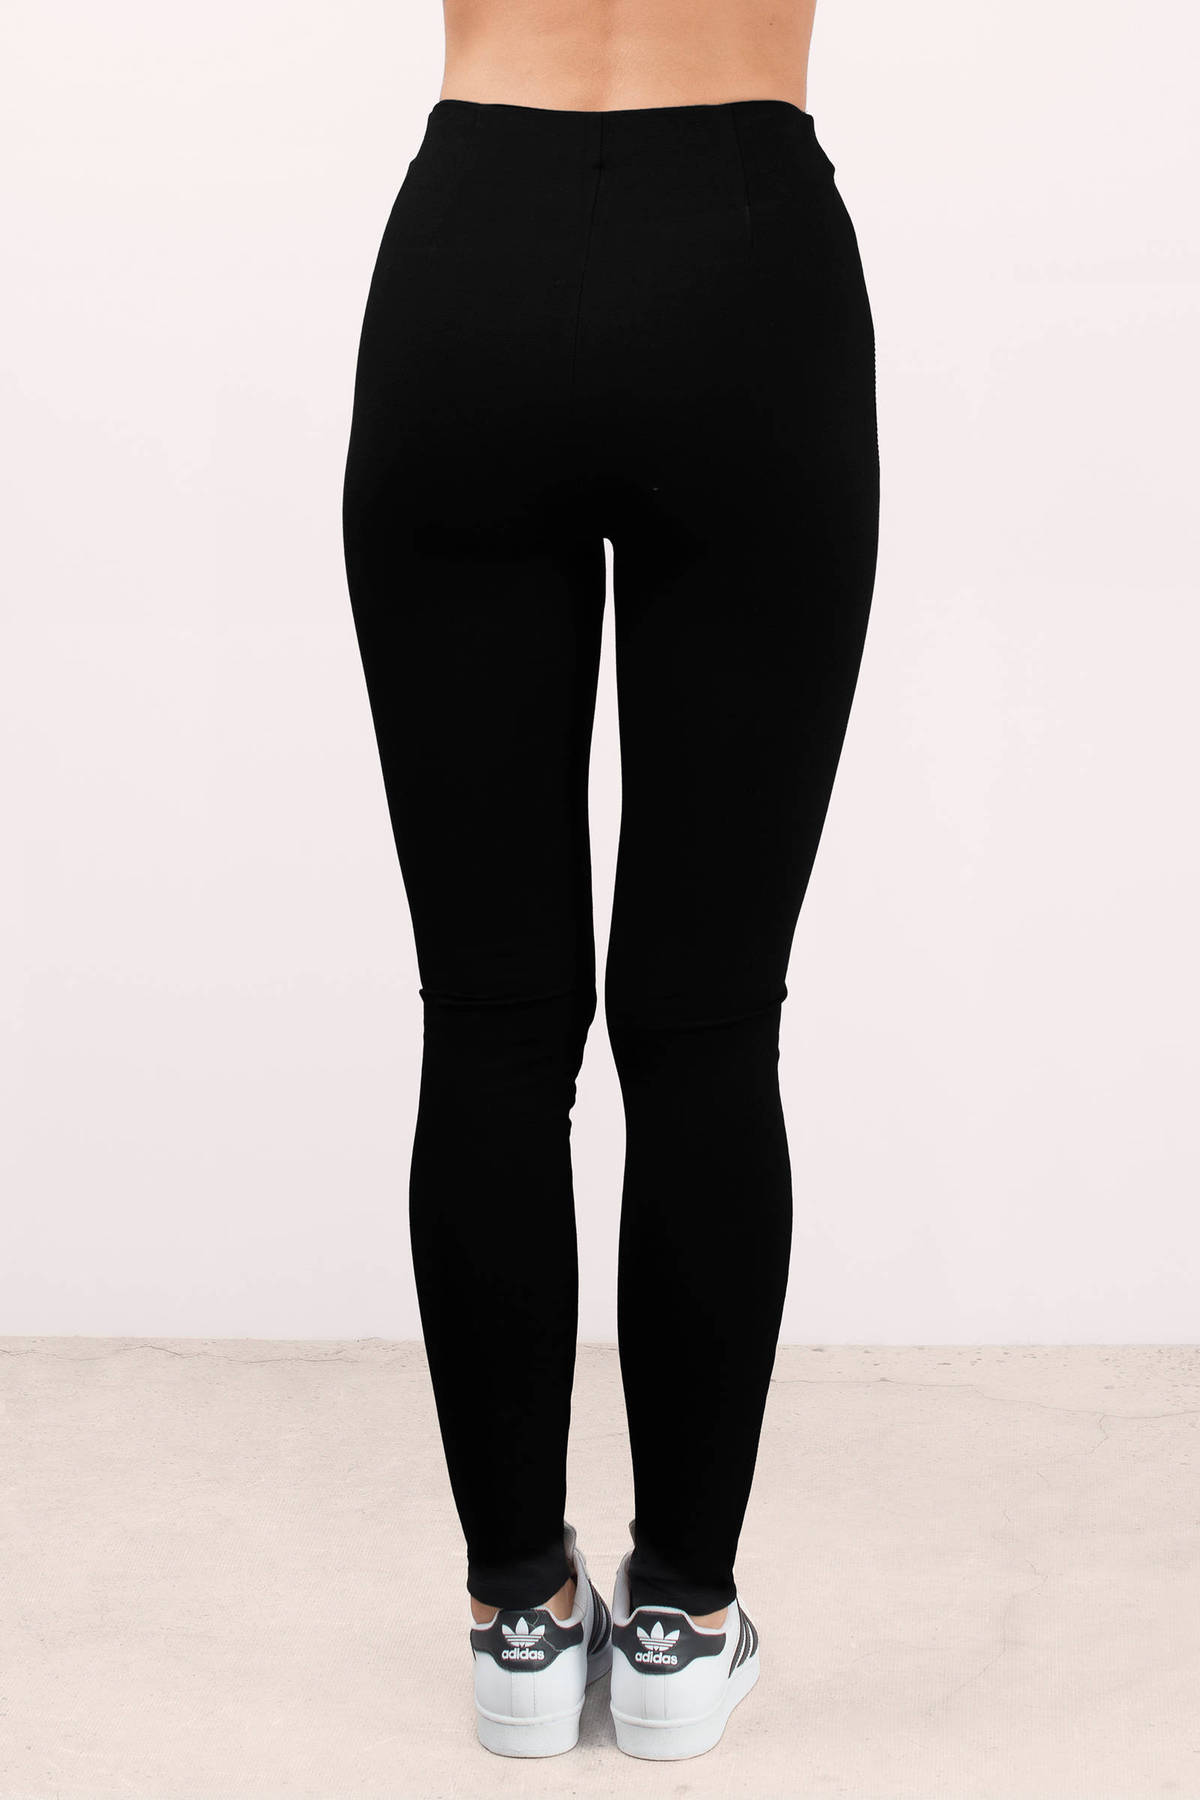 Cassie Leggings in Black - $14 | Tobi US